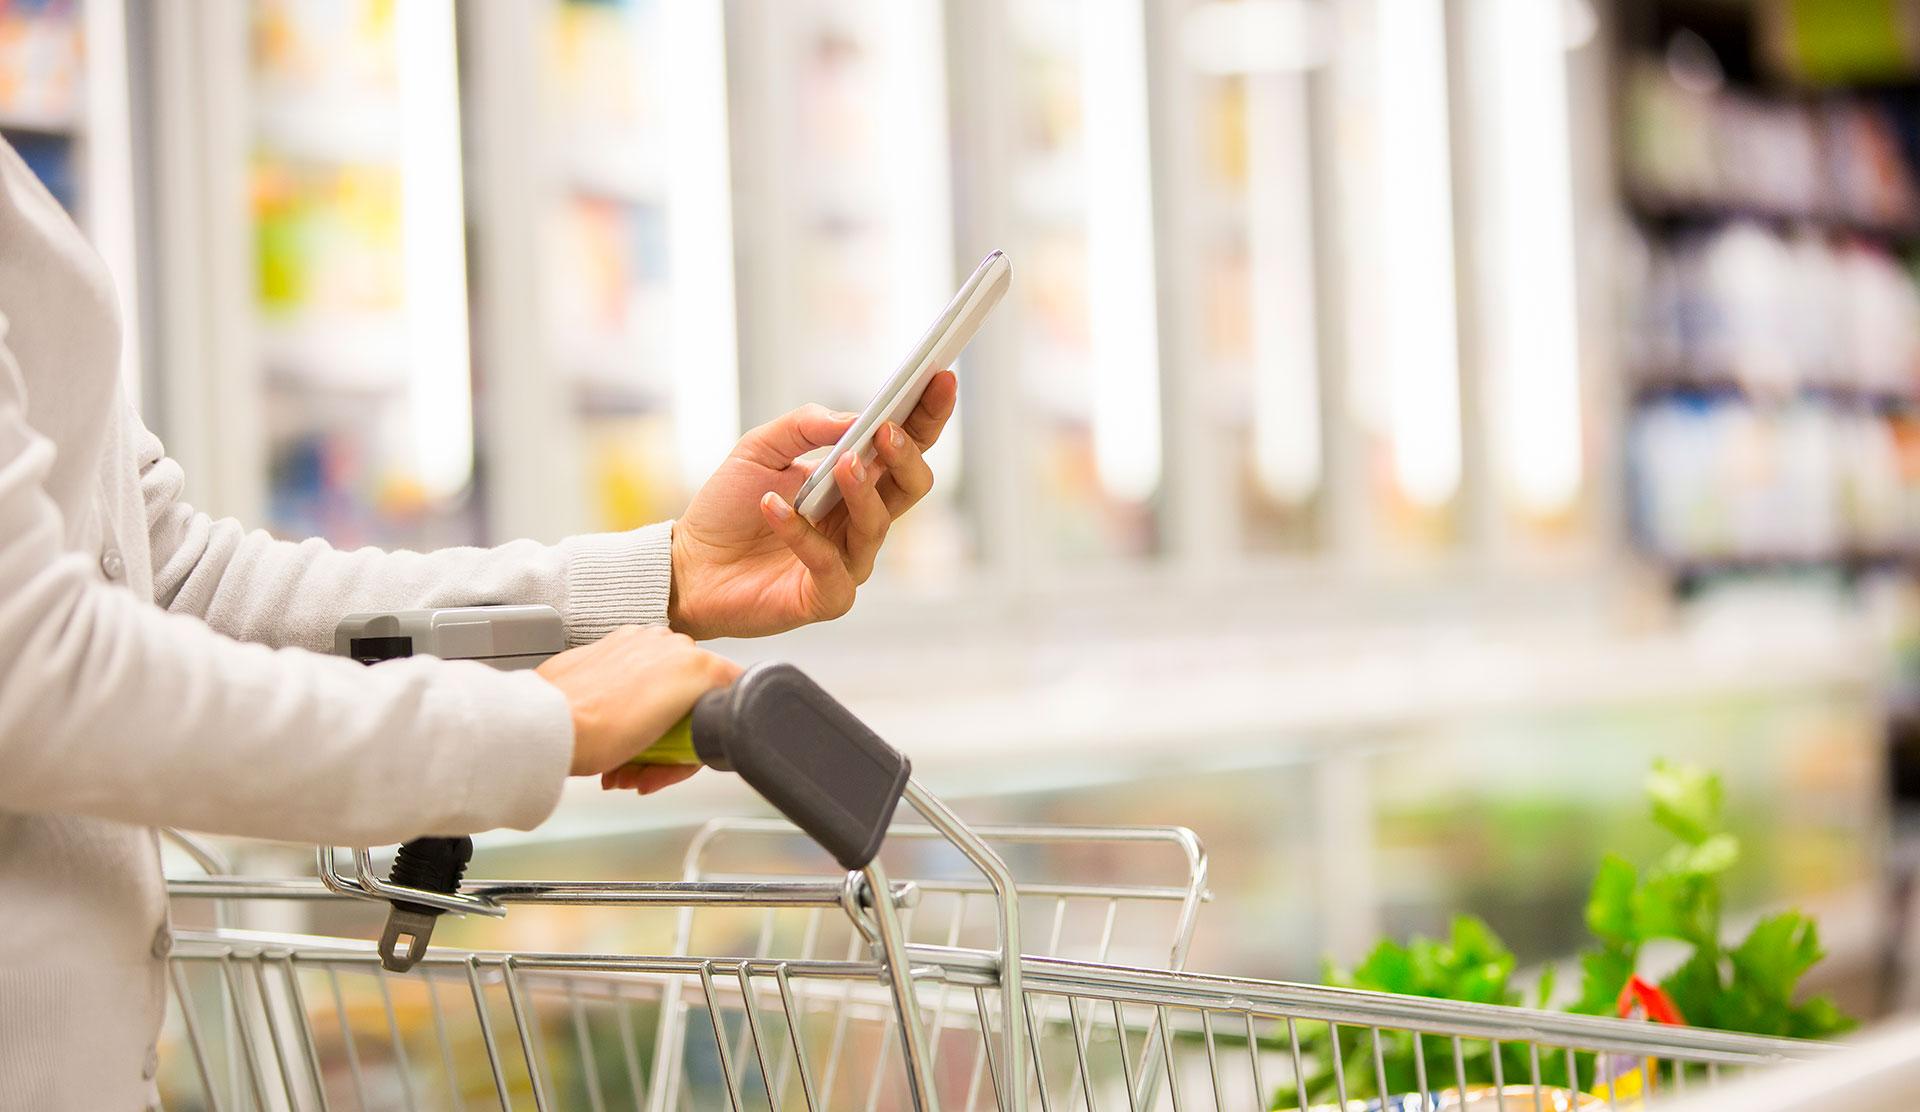 tiendas-compras-movil-comercio-electronico-app-smartphone-ecommerce-supermercado-bbva- bbva research - sector retail